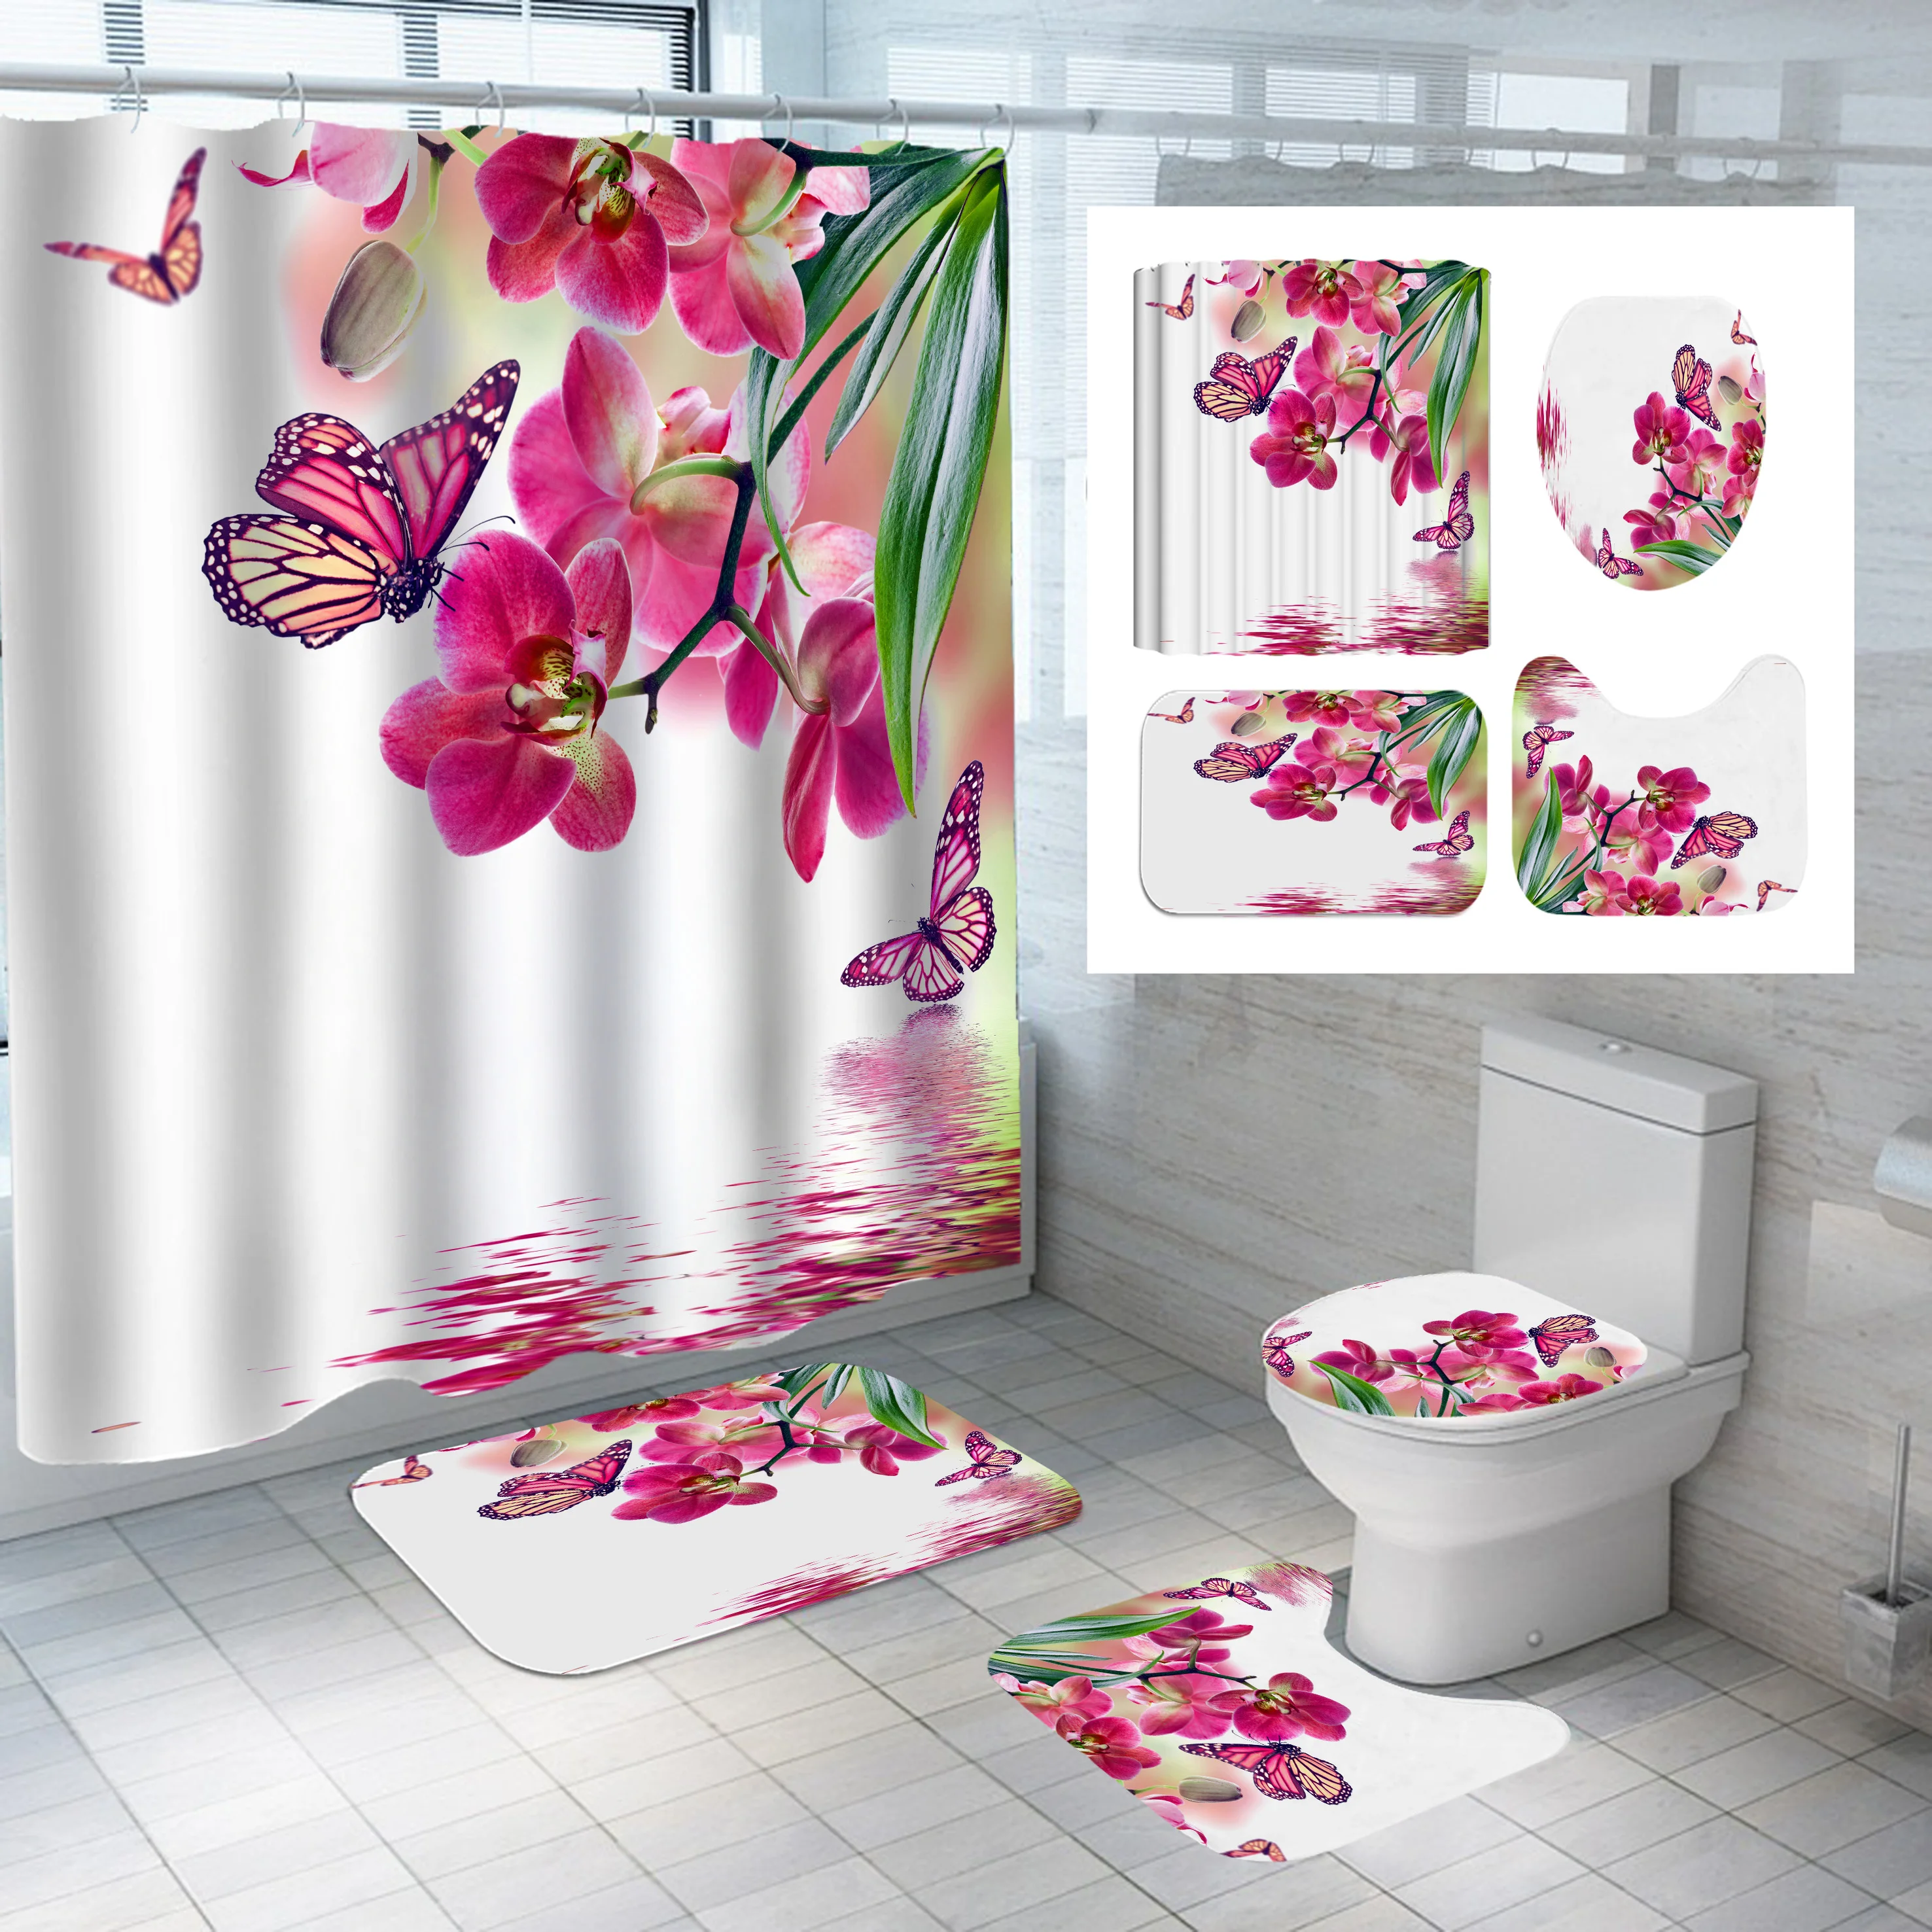 Details about   Bathroom Decor Shower Curtain Printed Waterproof Bath Toilet Curtain 